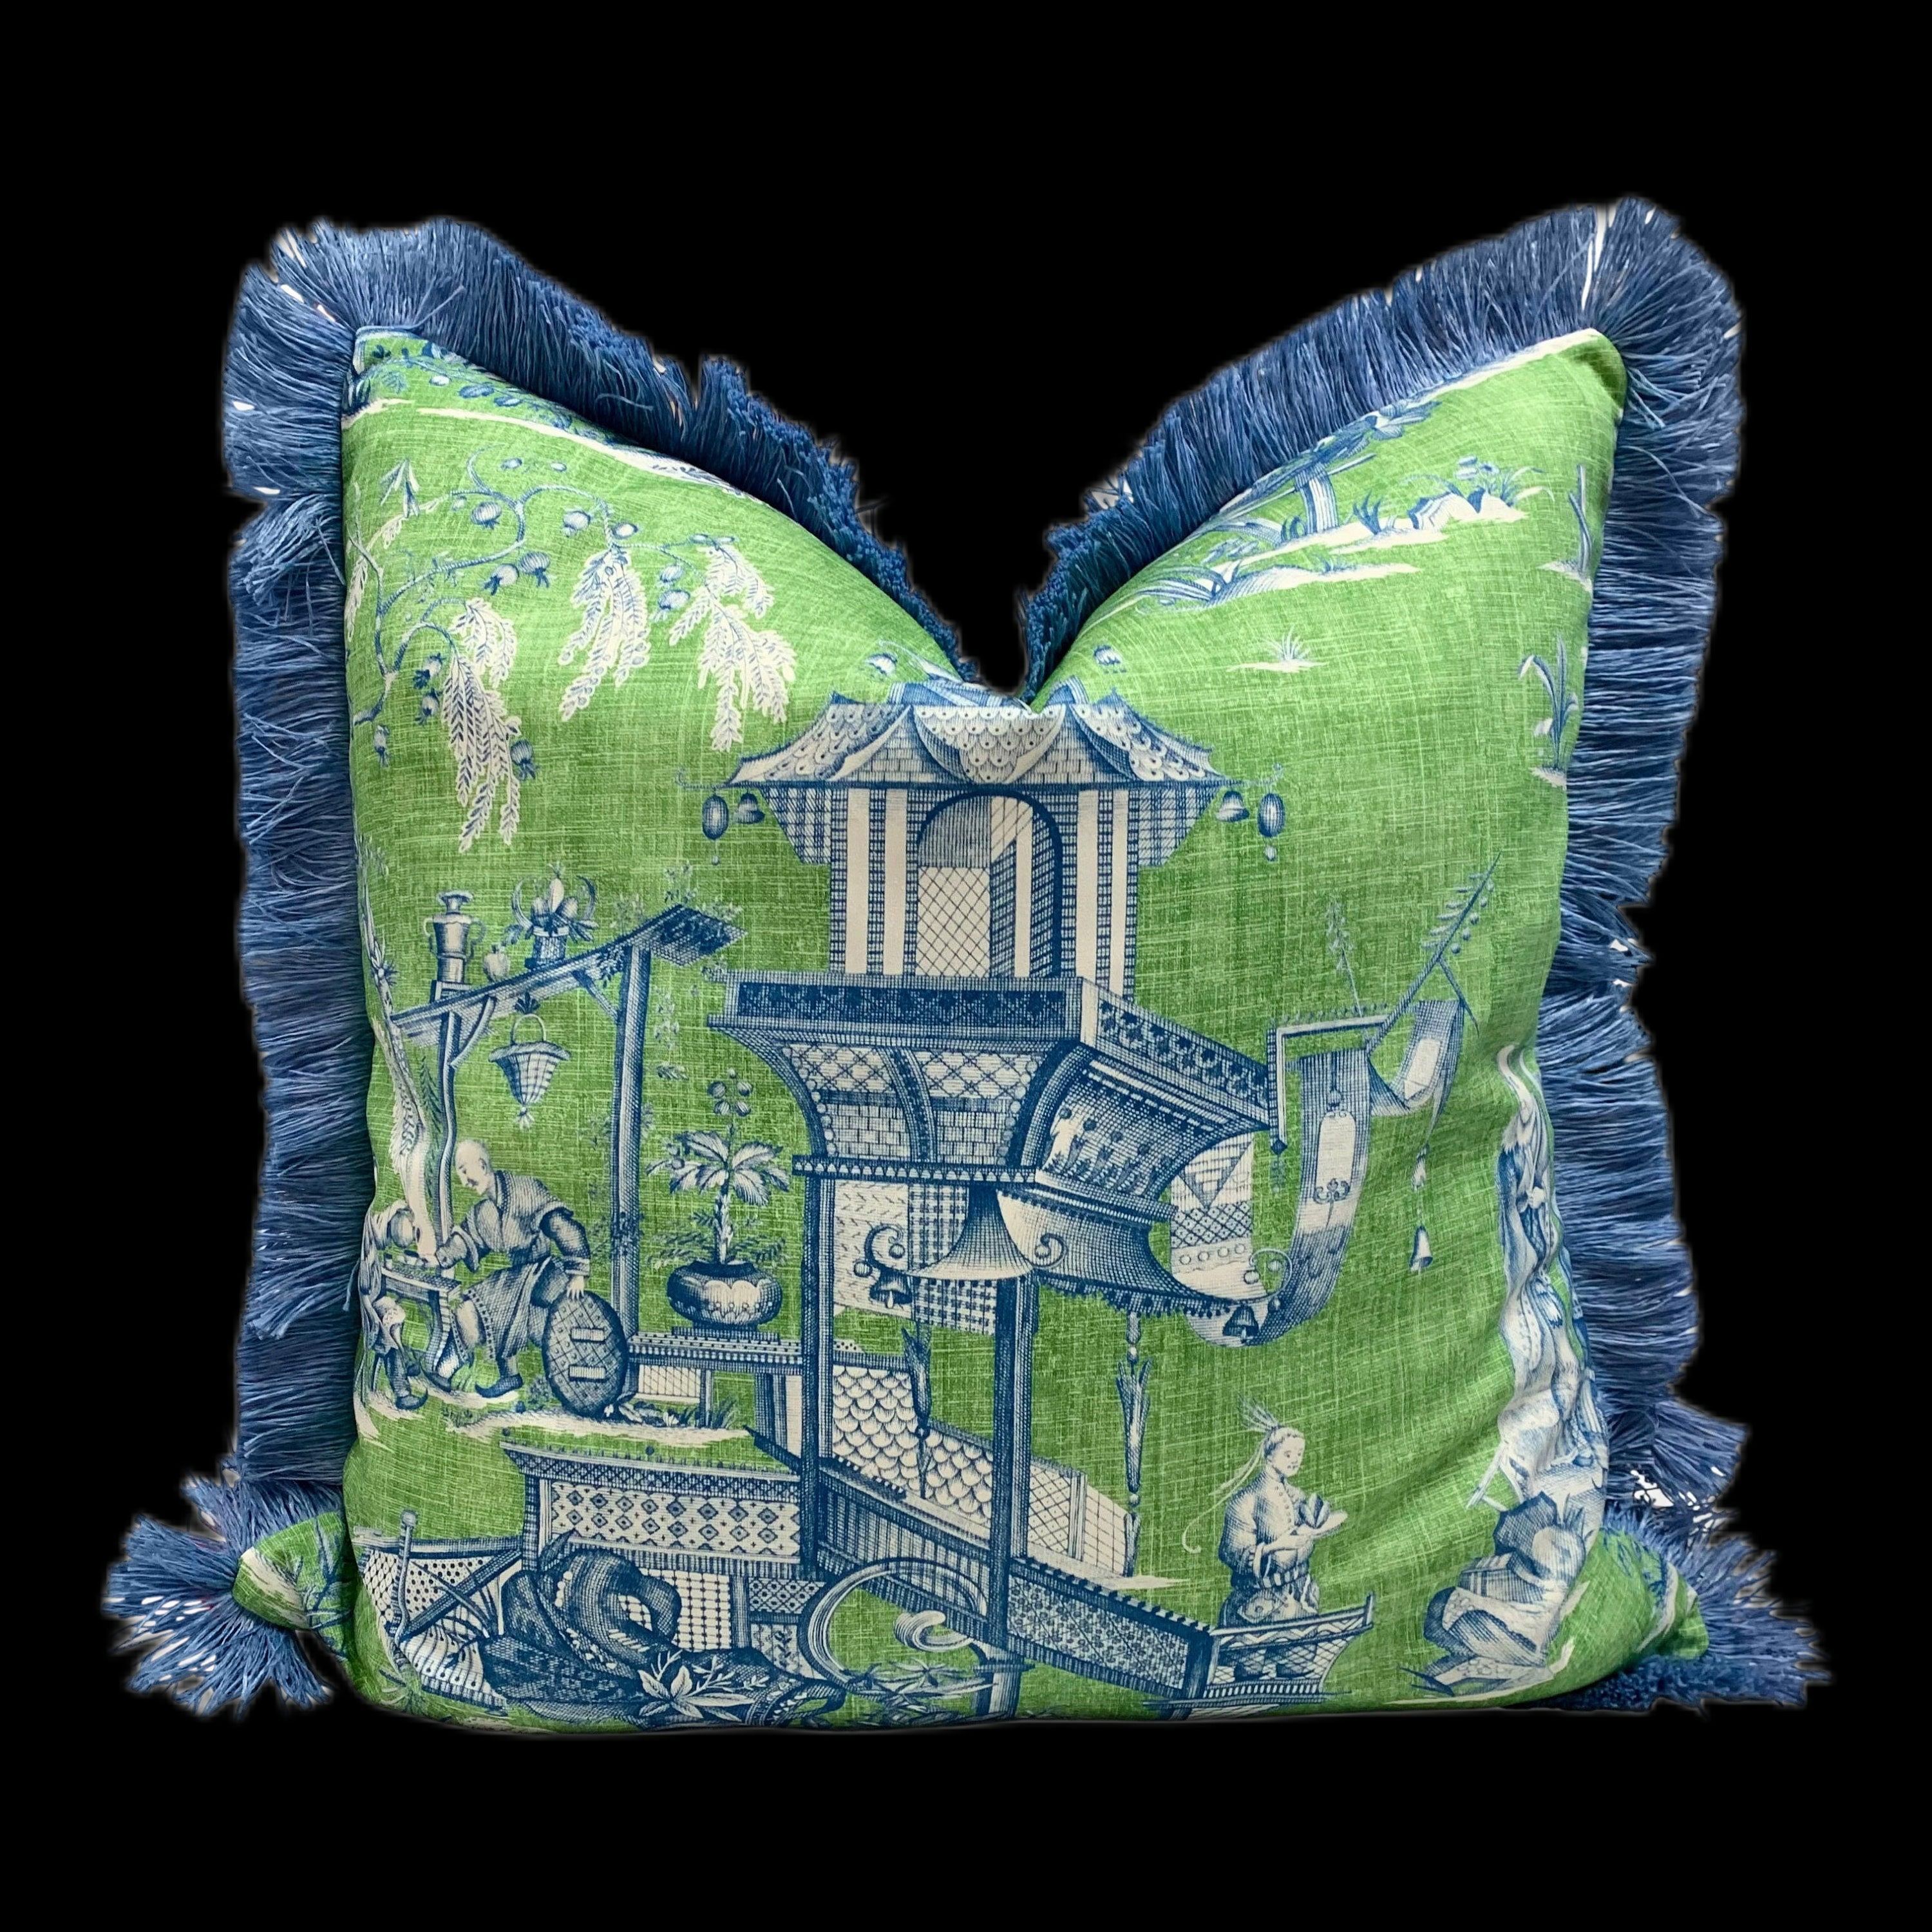 Cheng Toile Pillow in Green and Blue. Chinoiserie Pillow Cover, Designer Pillow, Decorative Pillow, Accent lumbar pillow, Pagoda Pillow